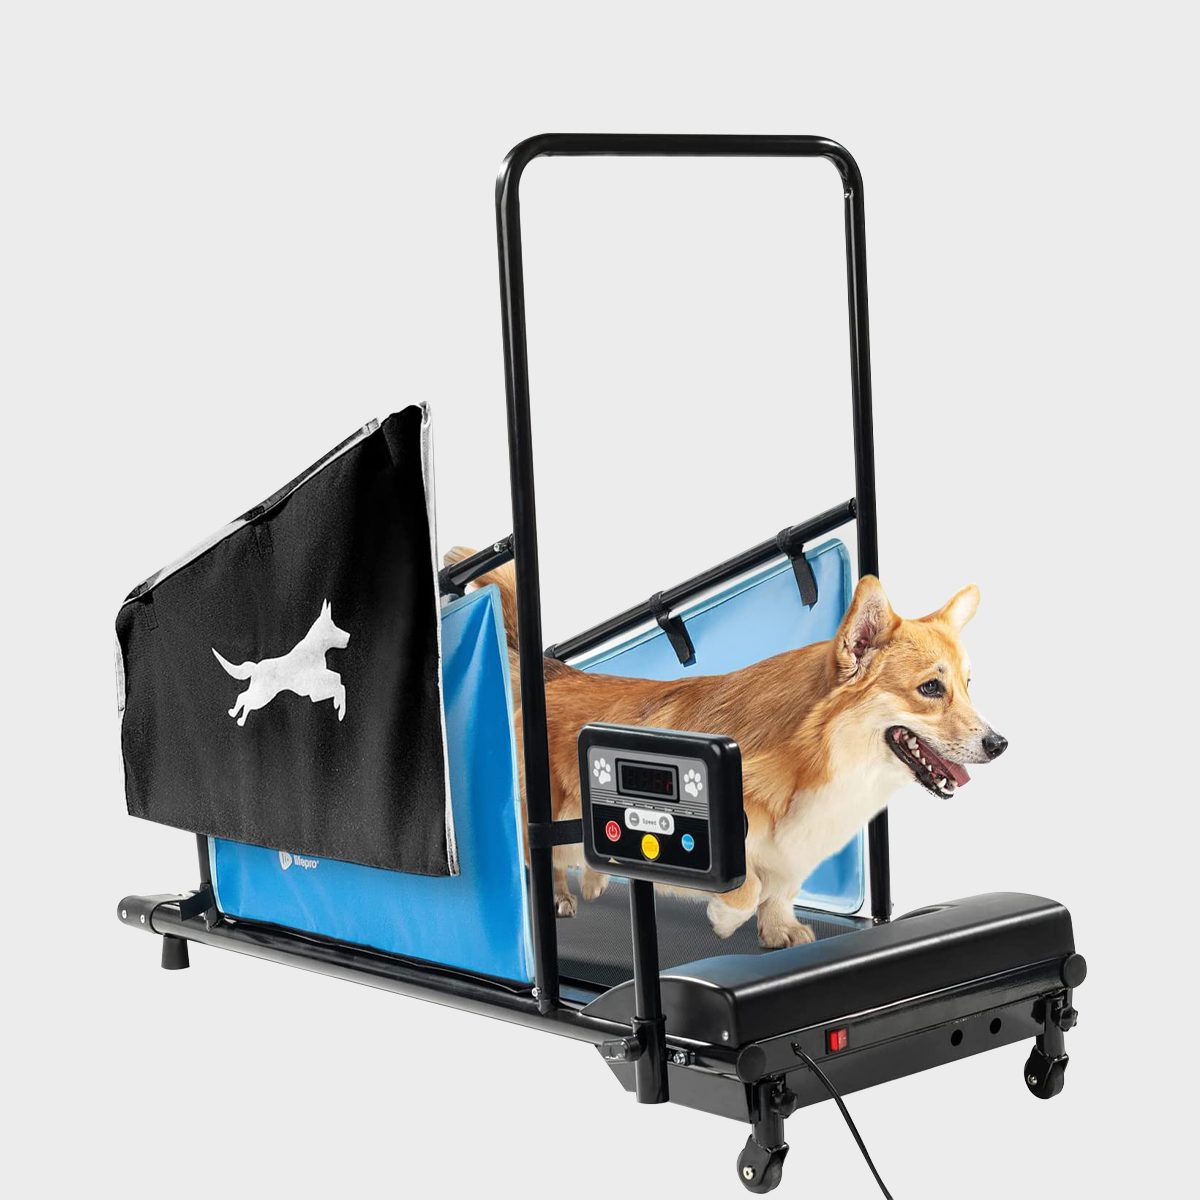 https://www.rd.com/wp-content/uploads/2022/06/LifePro-Dog-Treadmill-Small-Dogs-ecomm-amazon.com_.jpg?fit=700%2C700